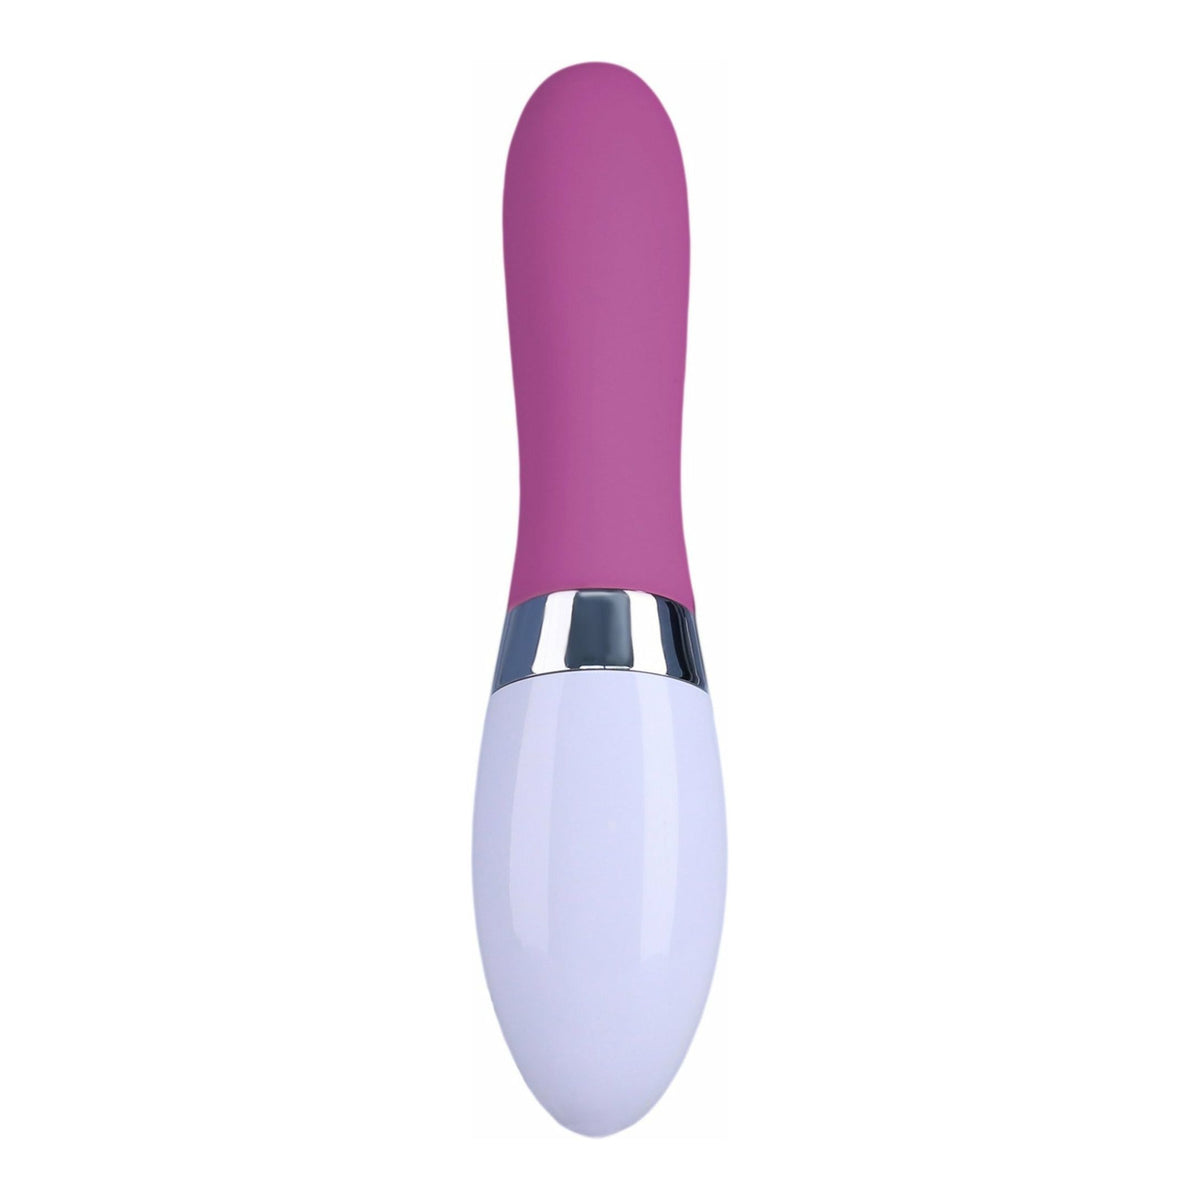 Kitty Silicone G-Spot Vibrator - Purple